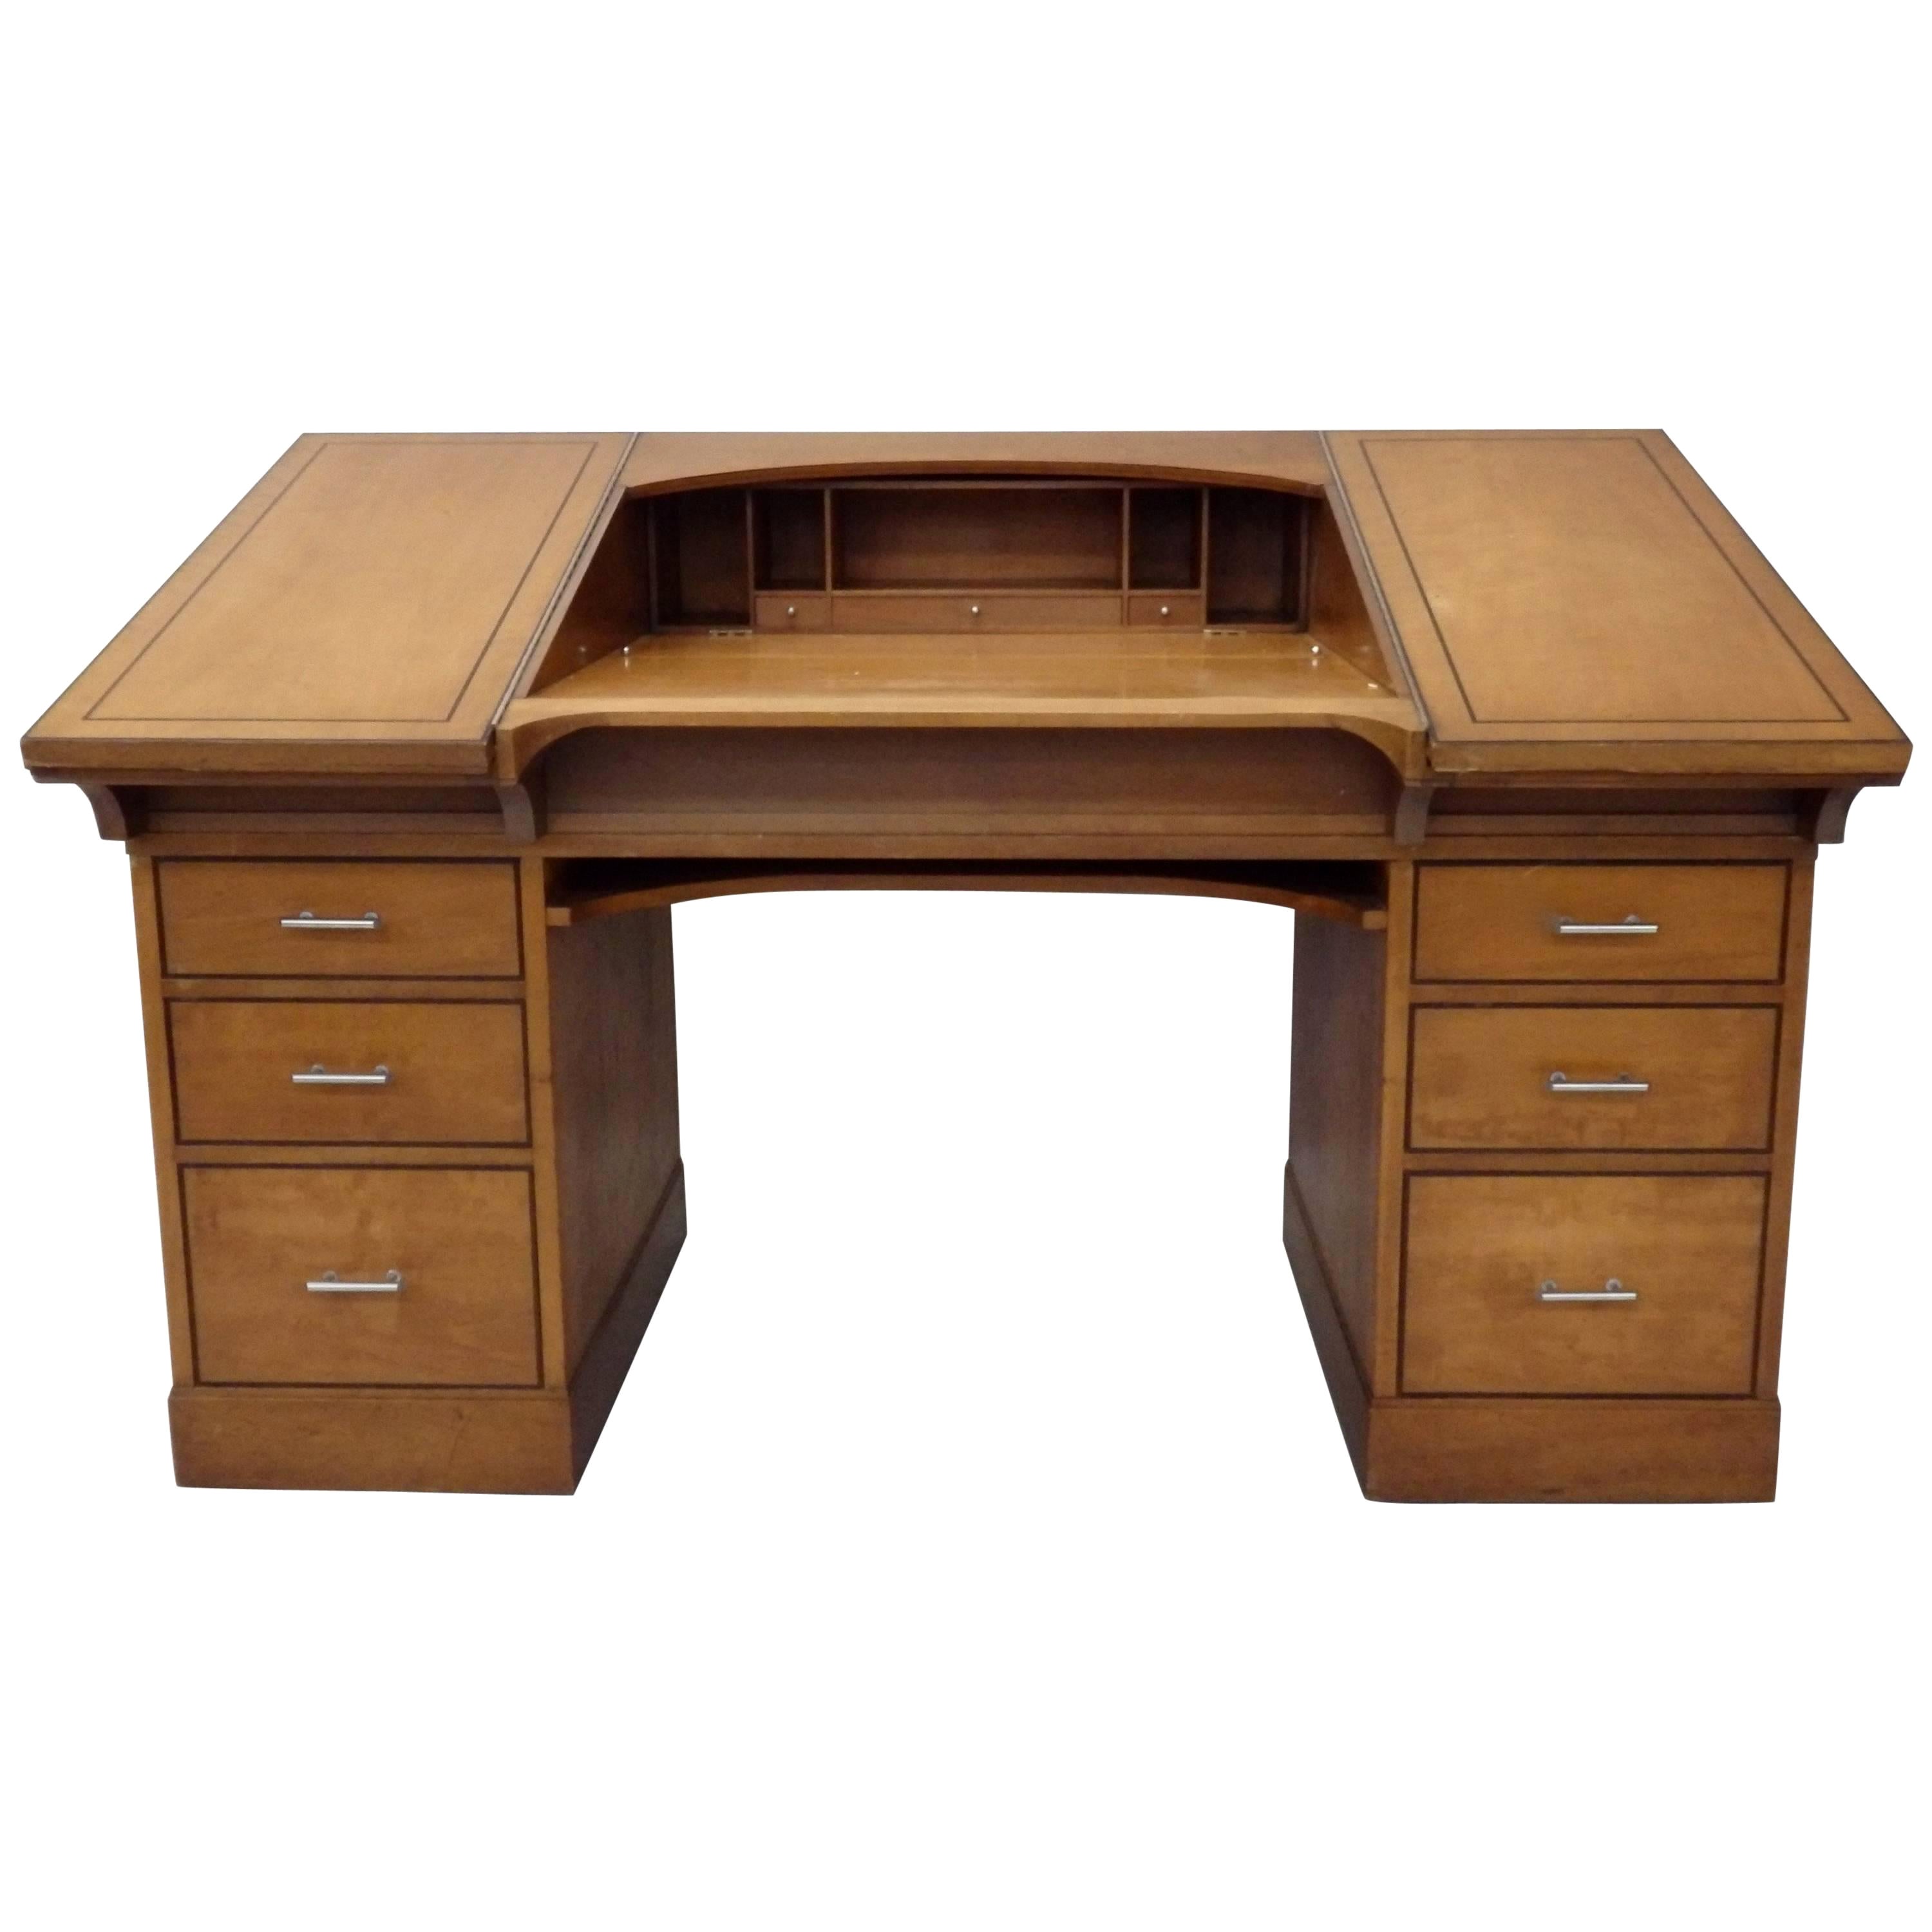 Johann Tapp Custom Built Art Deco era Cartoonist Desk with Hidden Compartments For Sale